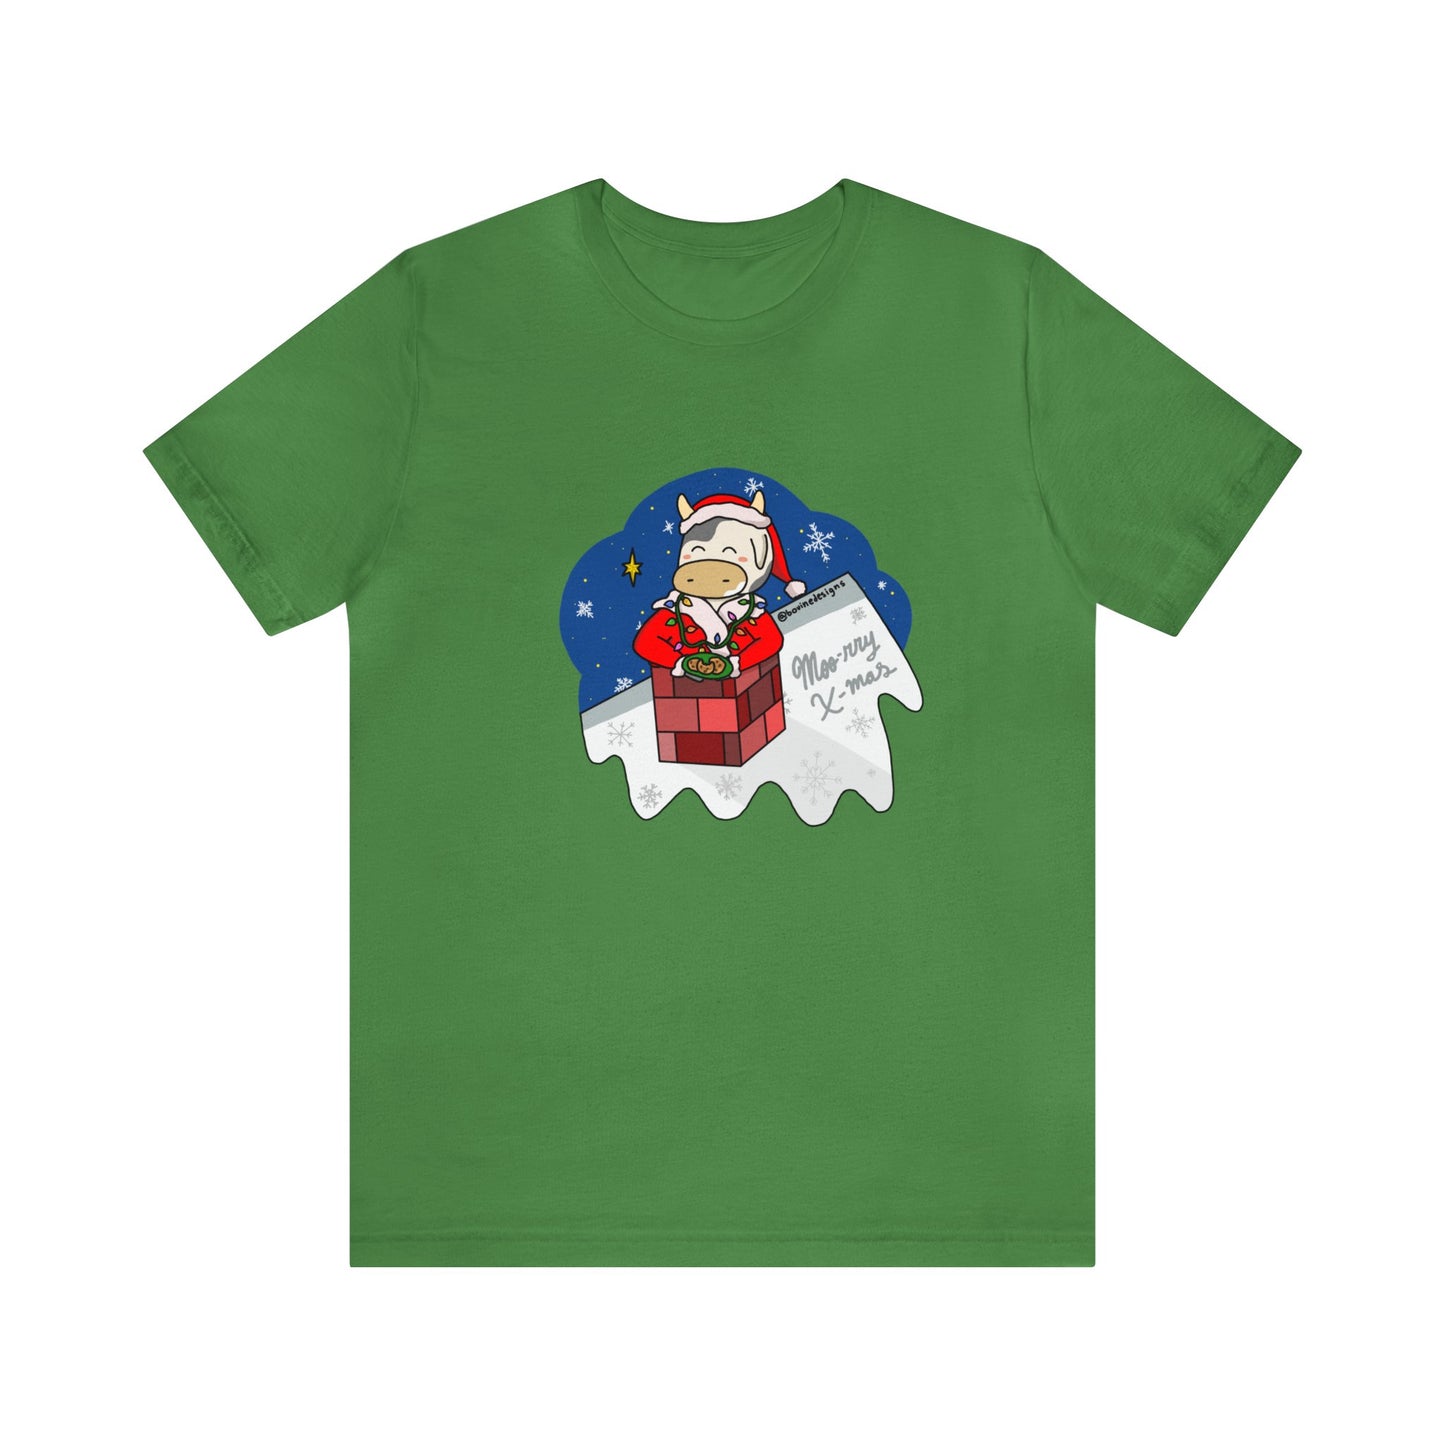 Moorry Christmas T-Shirt